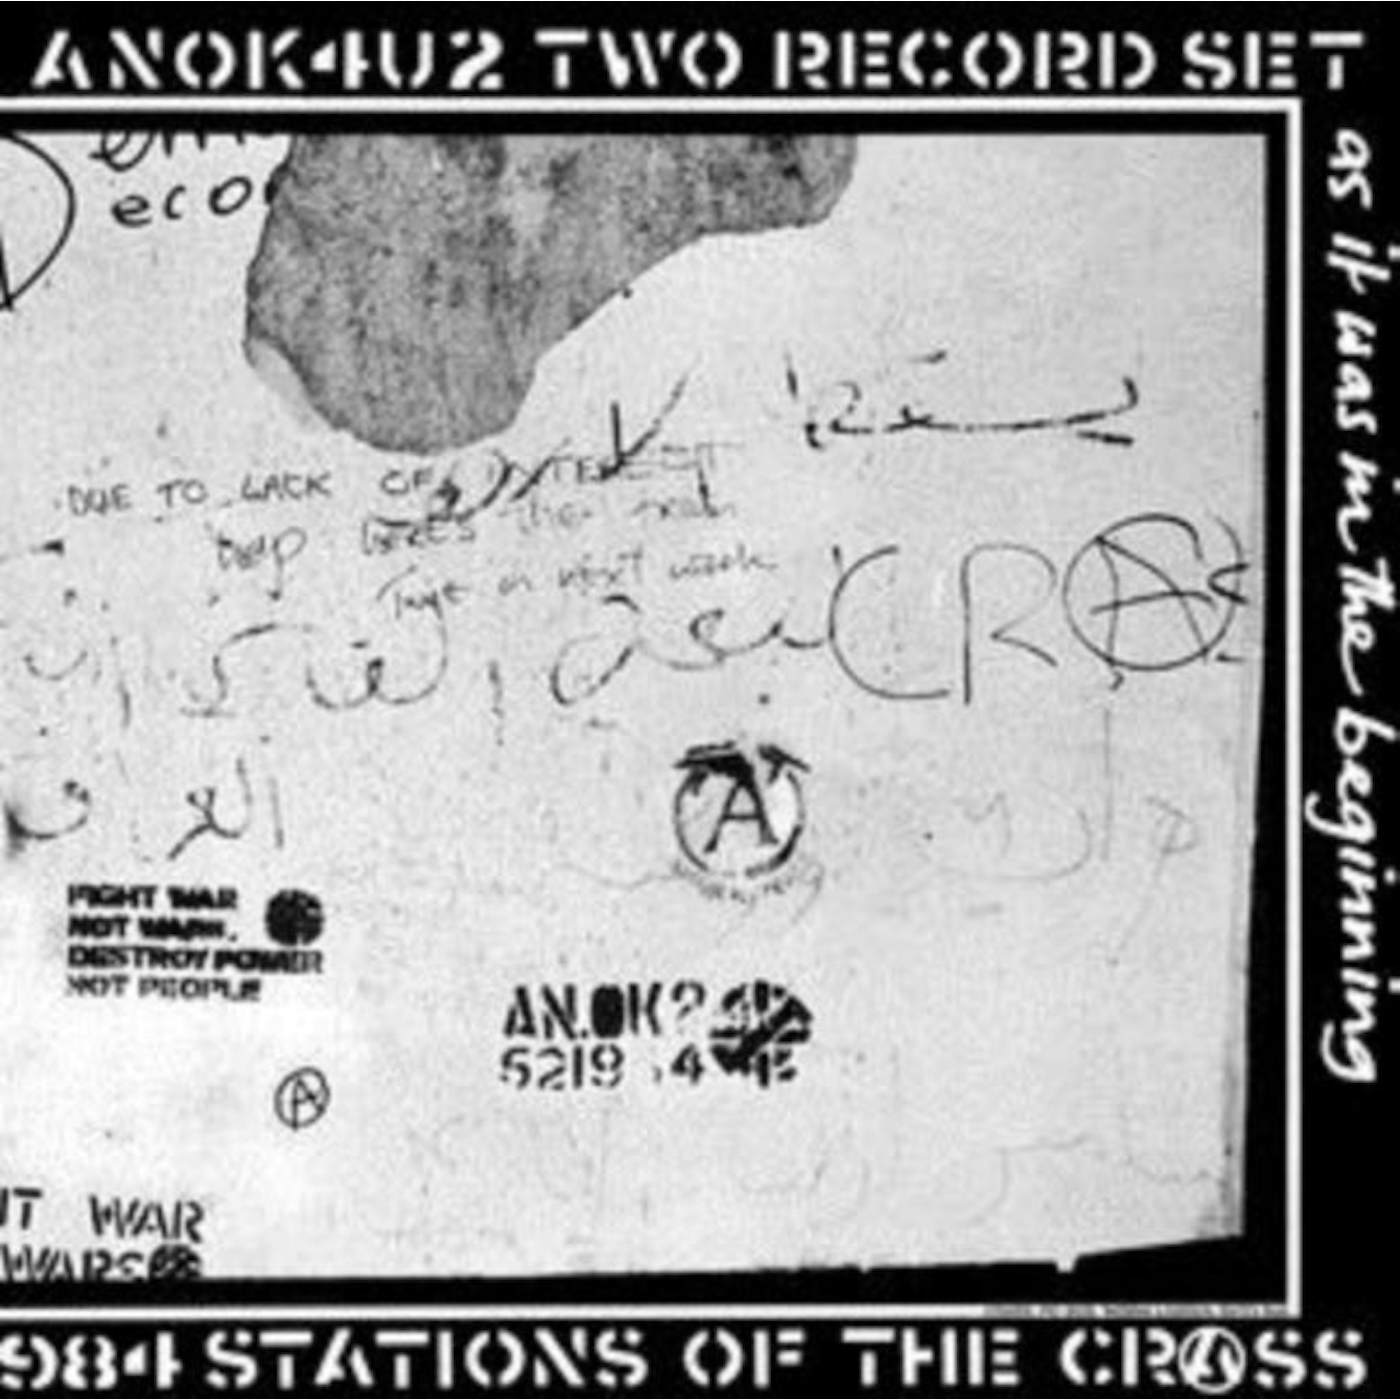 Crass LP Vinyl Record - Stations Of The Crass